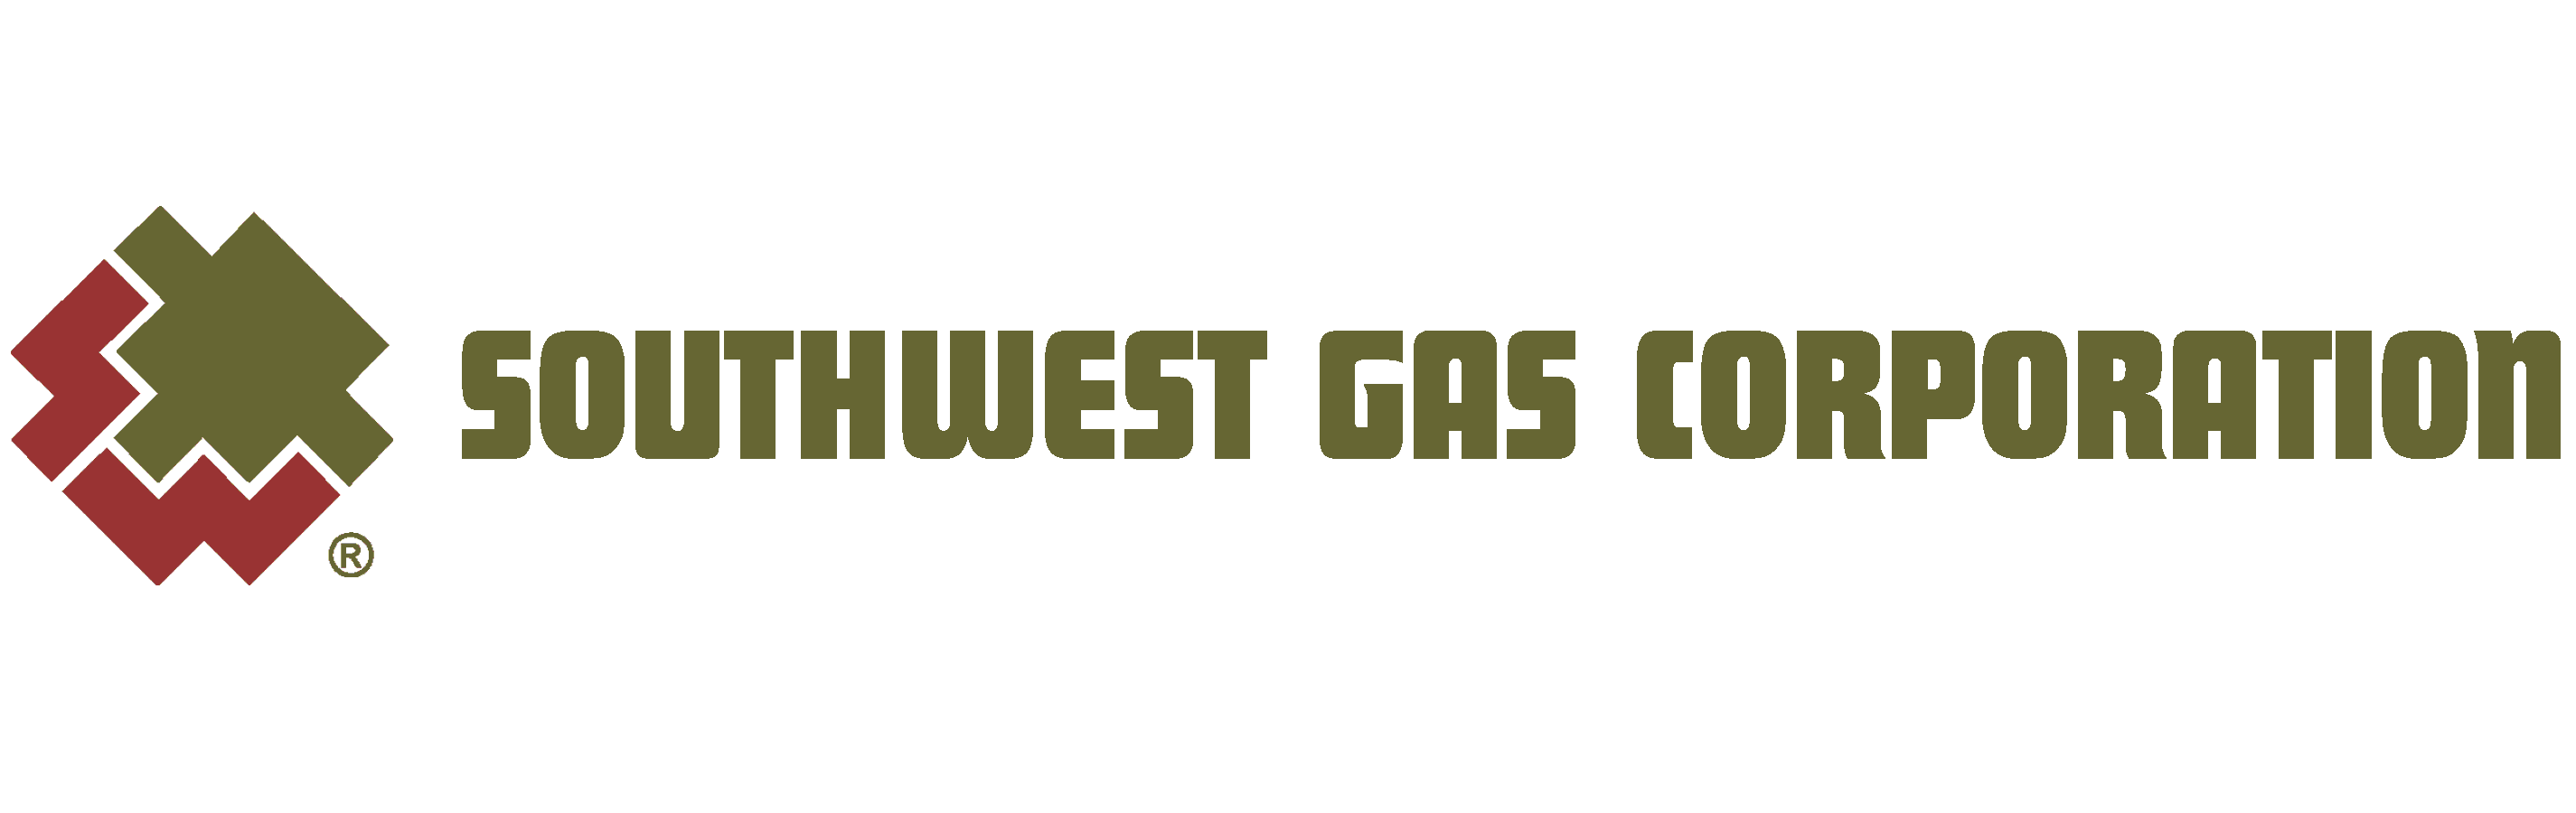 Southwest Gas Logo